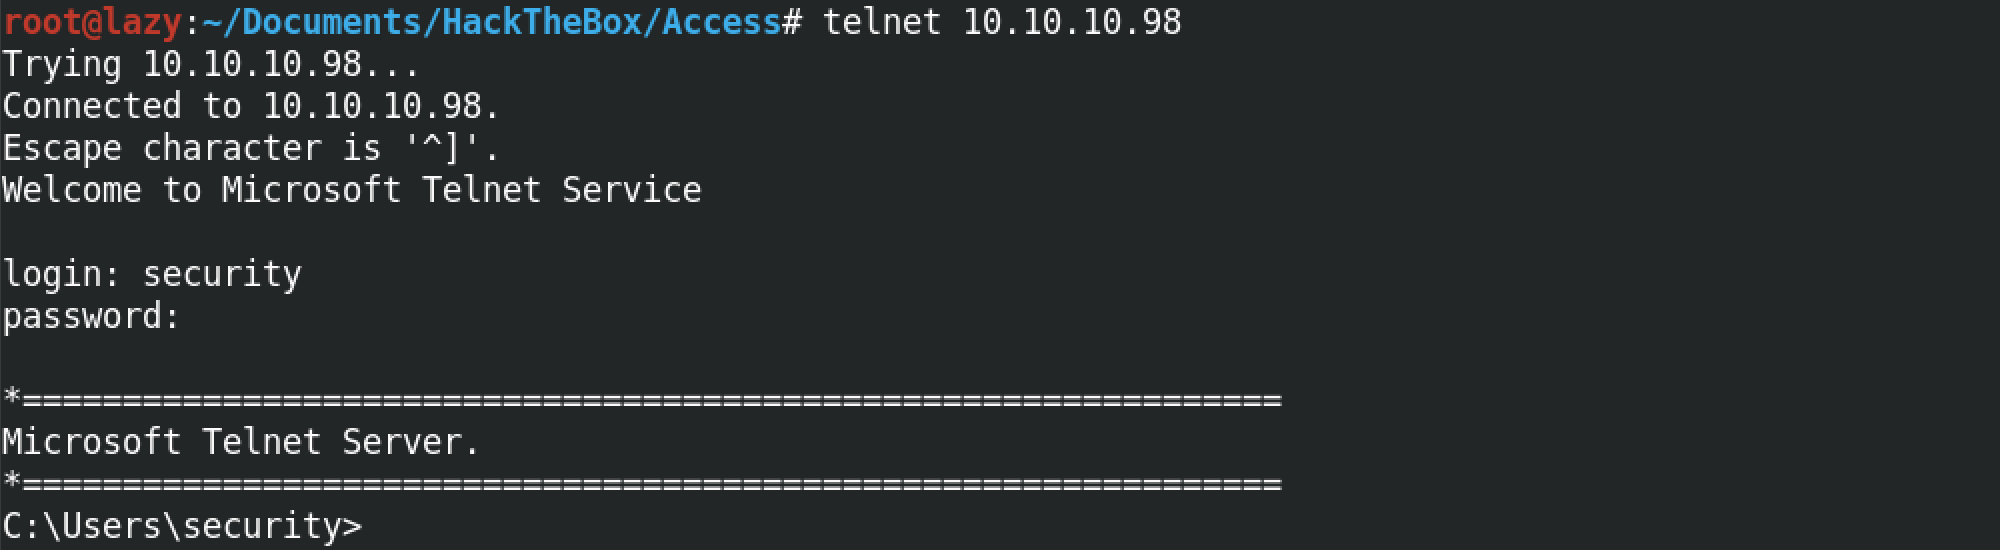 Telnet to the target Windows box.